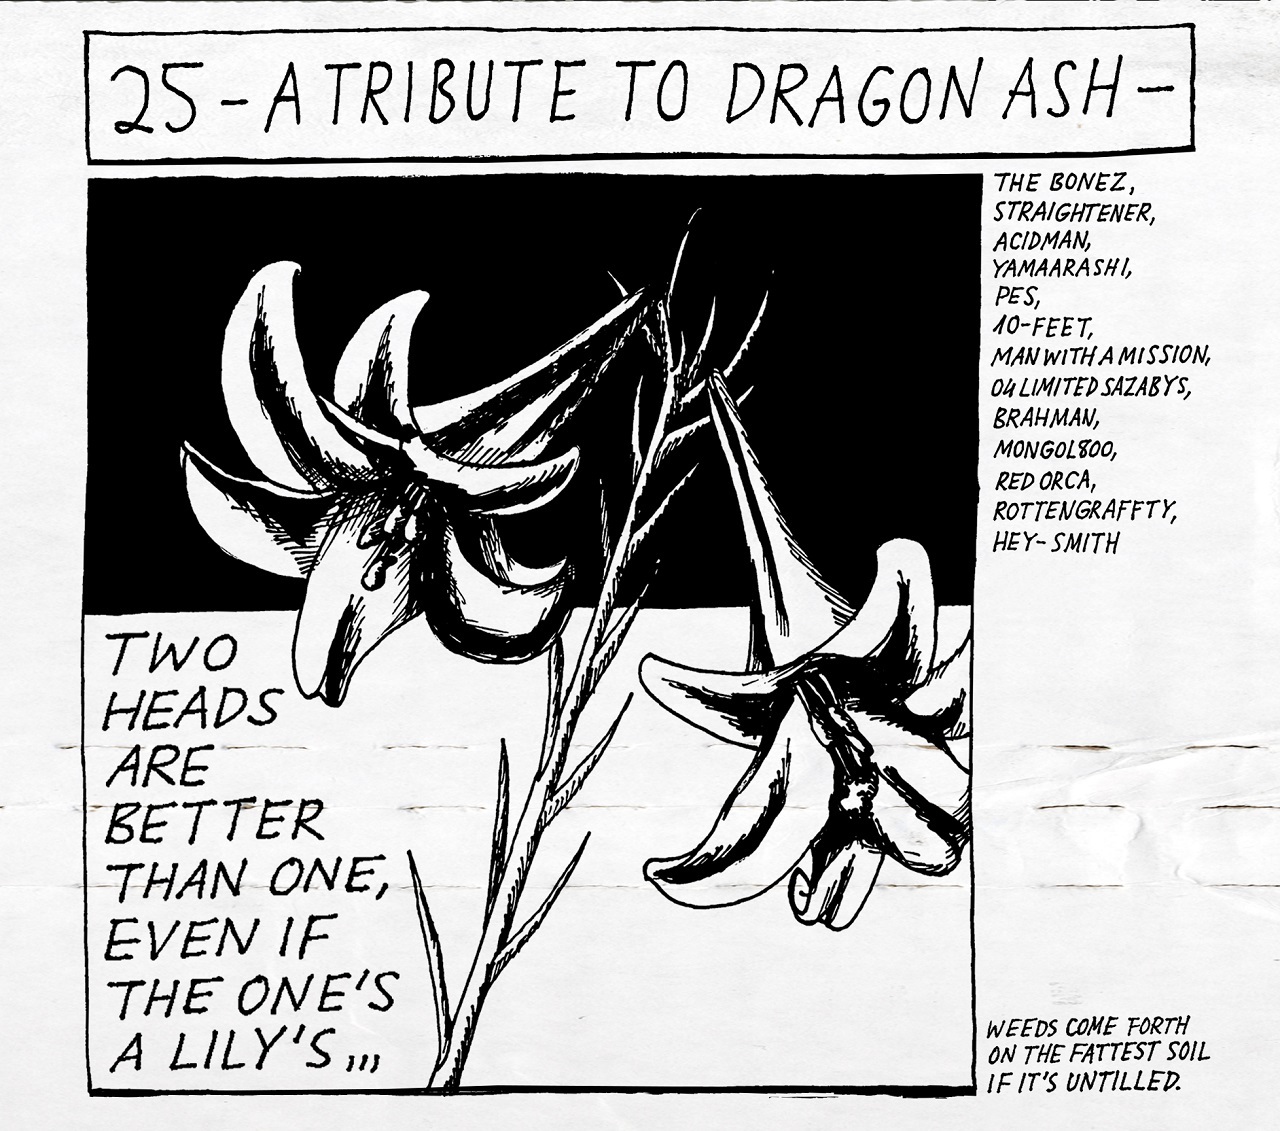 『25 - A Tribute To Dragon Ash』ジャケット写真